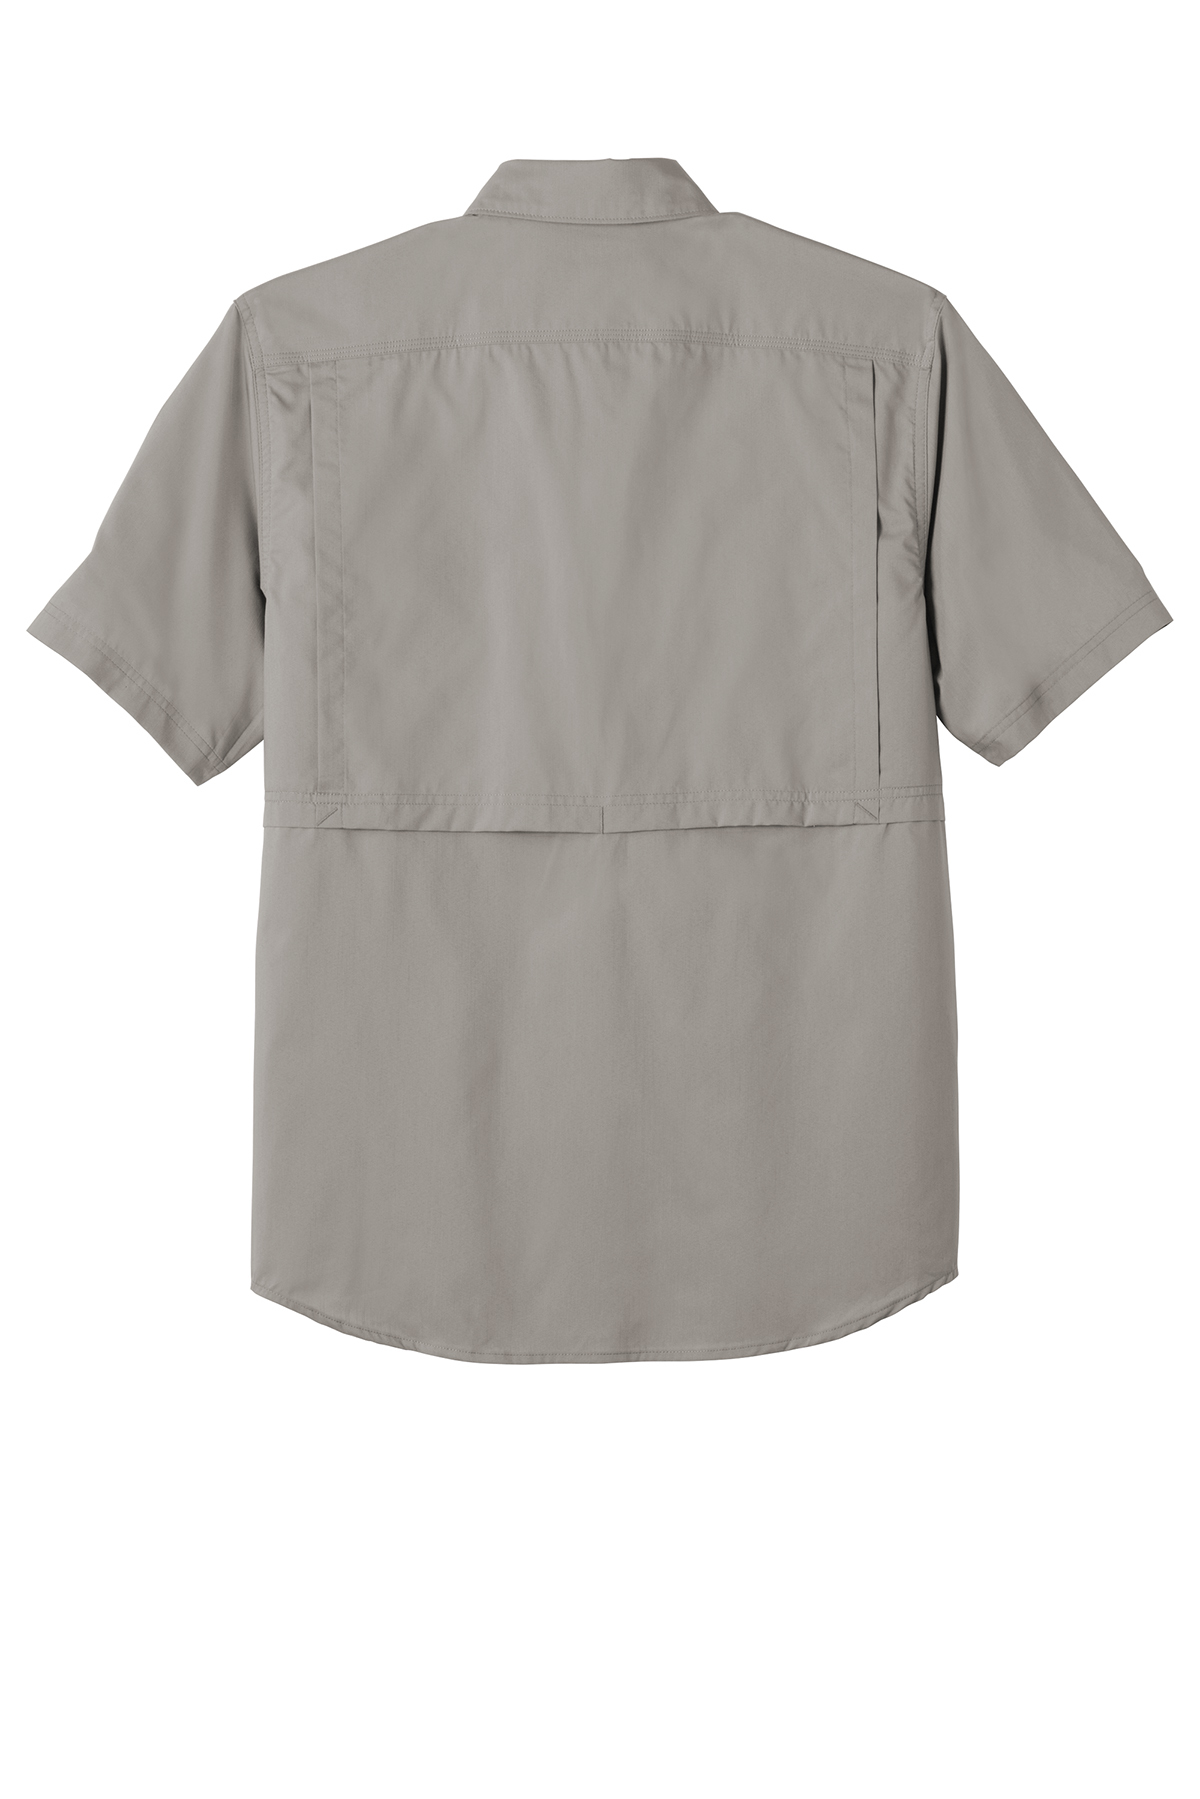 Carhartt Force ®Ridgefield Solid Short Sleeve Shirt